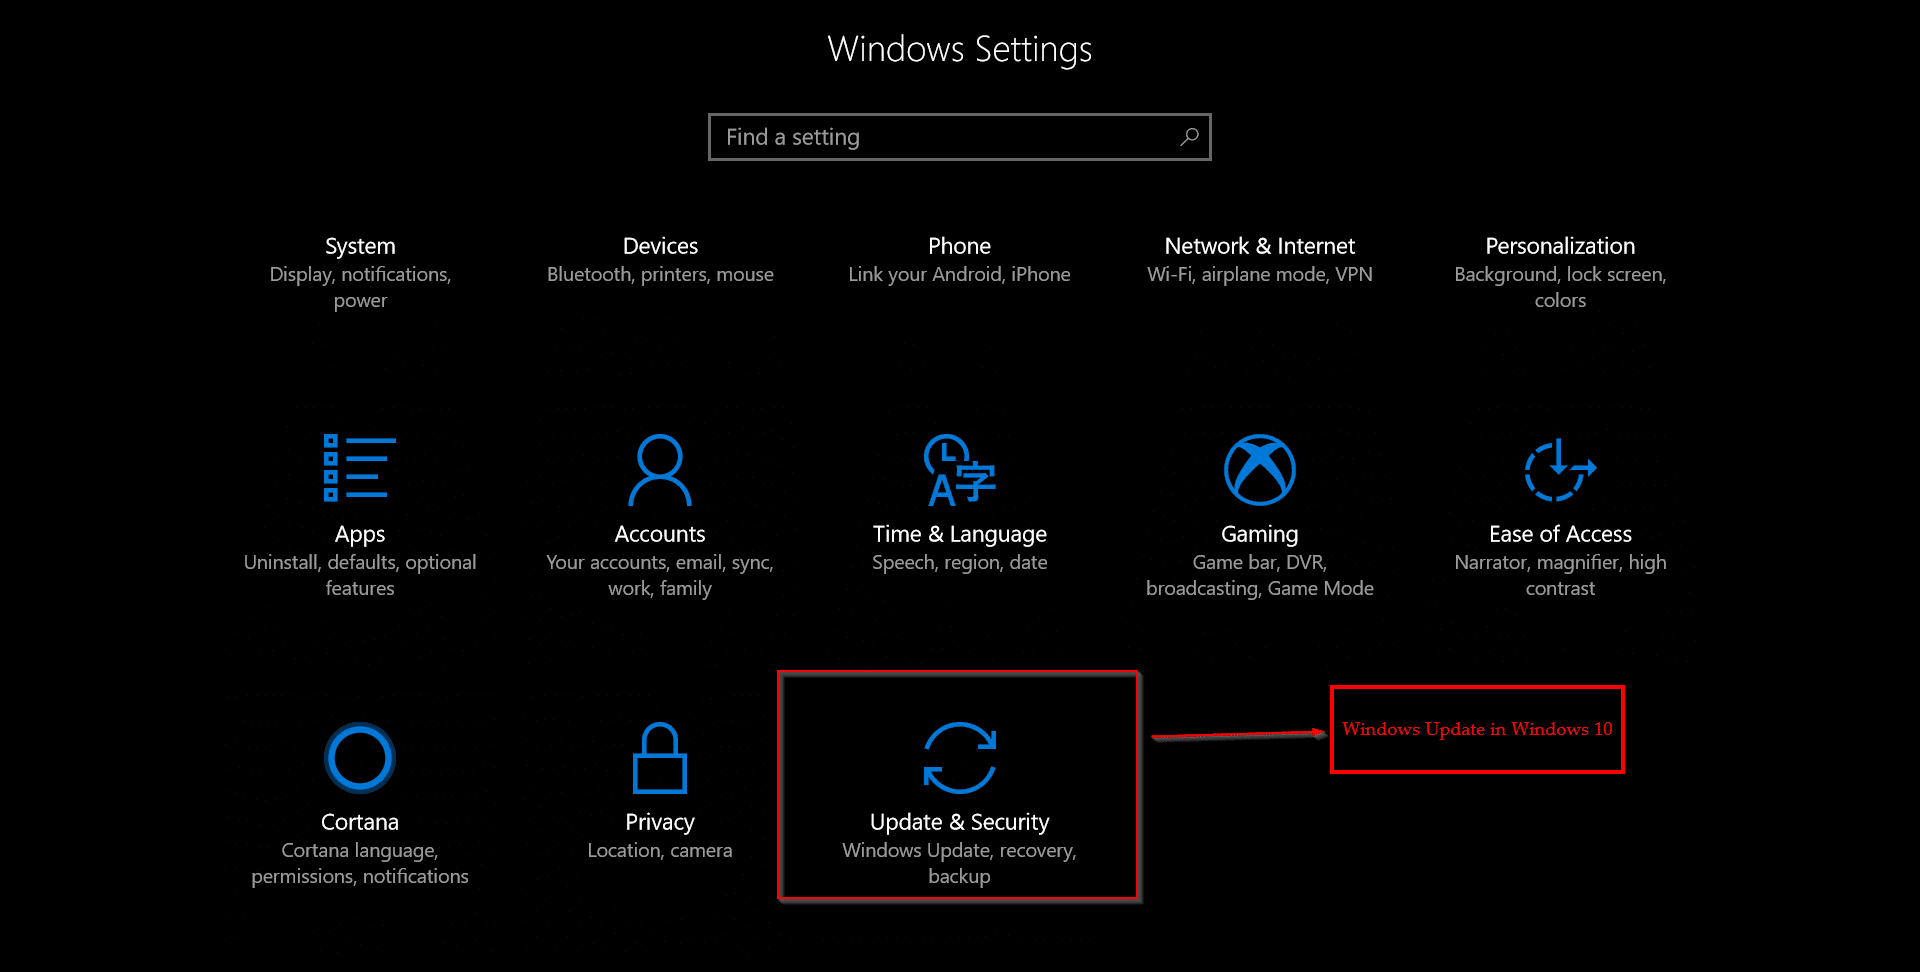 Windows Update In Windows 10